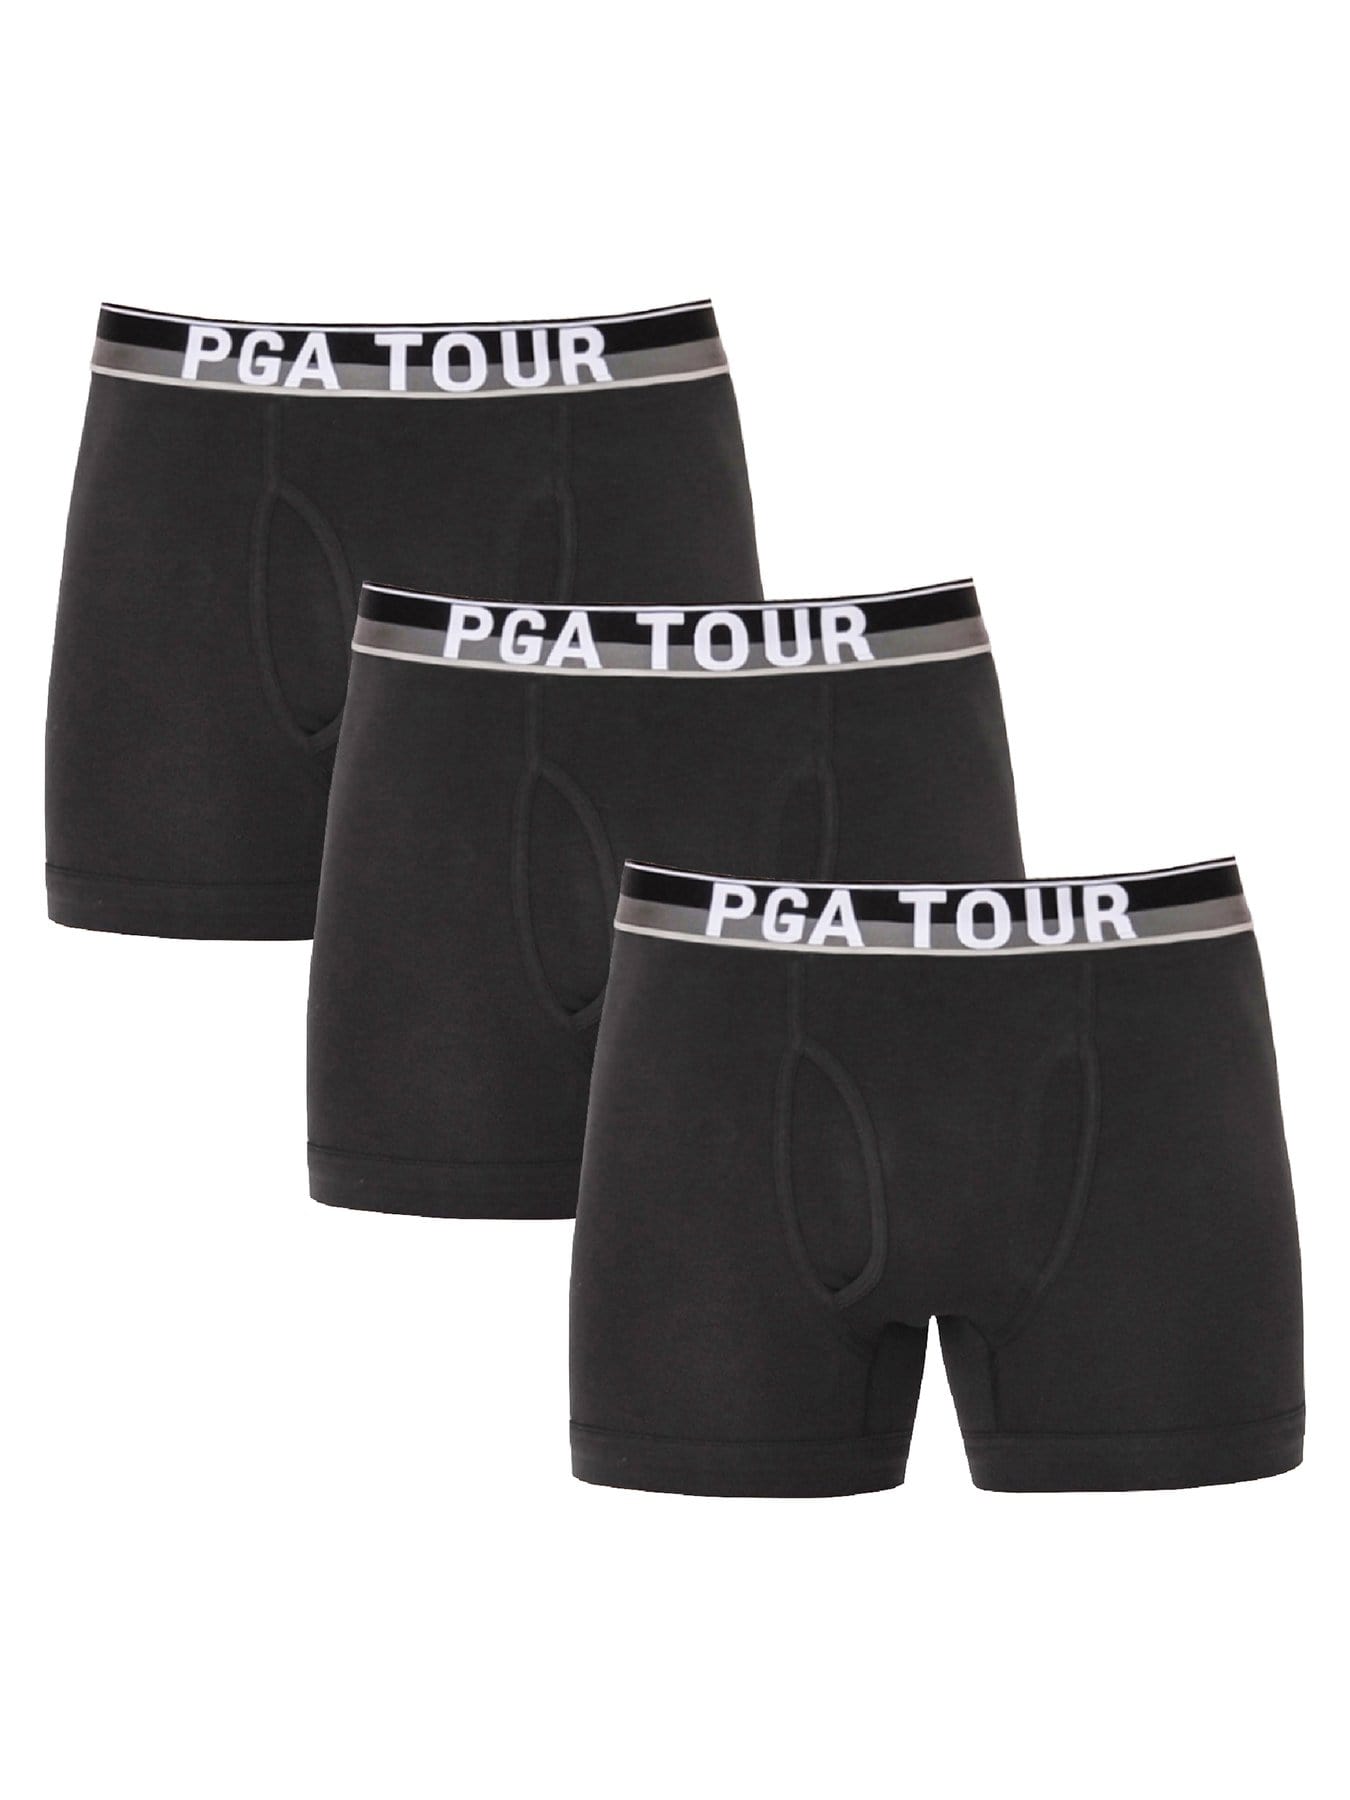 PGA TOUR Apparel Mens Boxer Brief Underwear (3-Pack), Size Medium, Black/Black/Black, Cotton/Spandex | Golf Apparel Shop